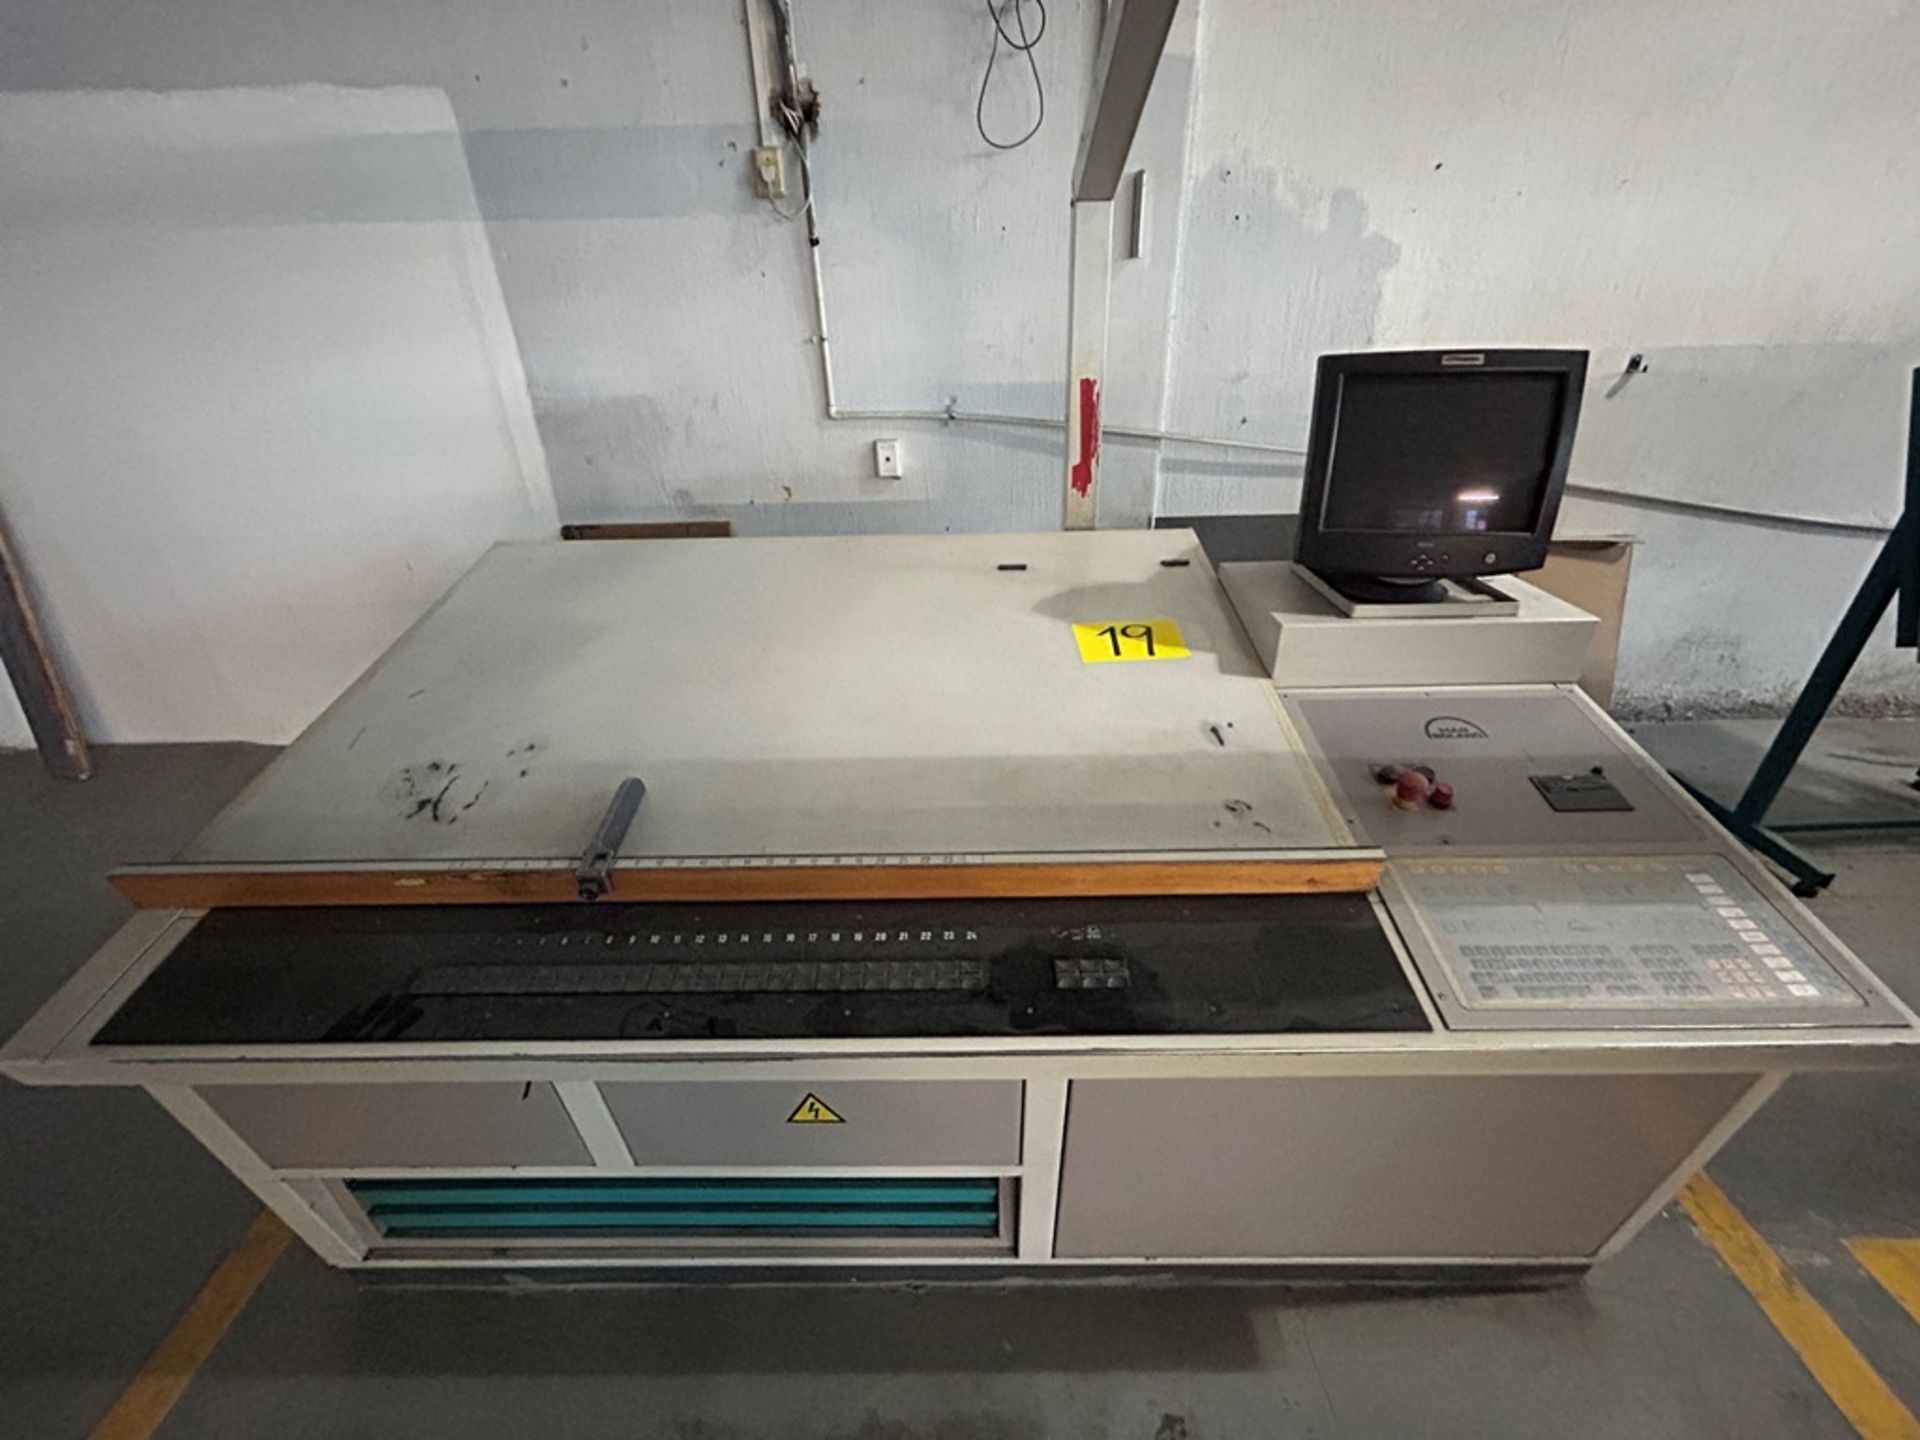 MAN ROLAND Printing Machine (Flatbed Press), Model R305 N 5/0 1/4, Serial No. 28605B, Year 2000, 22 - Image 15 of 18